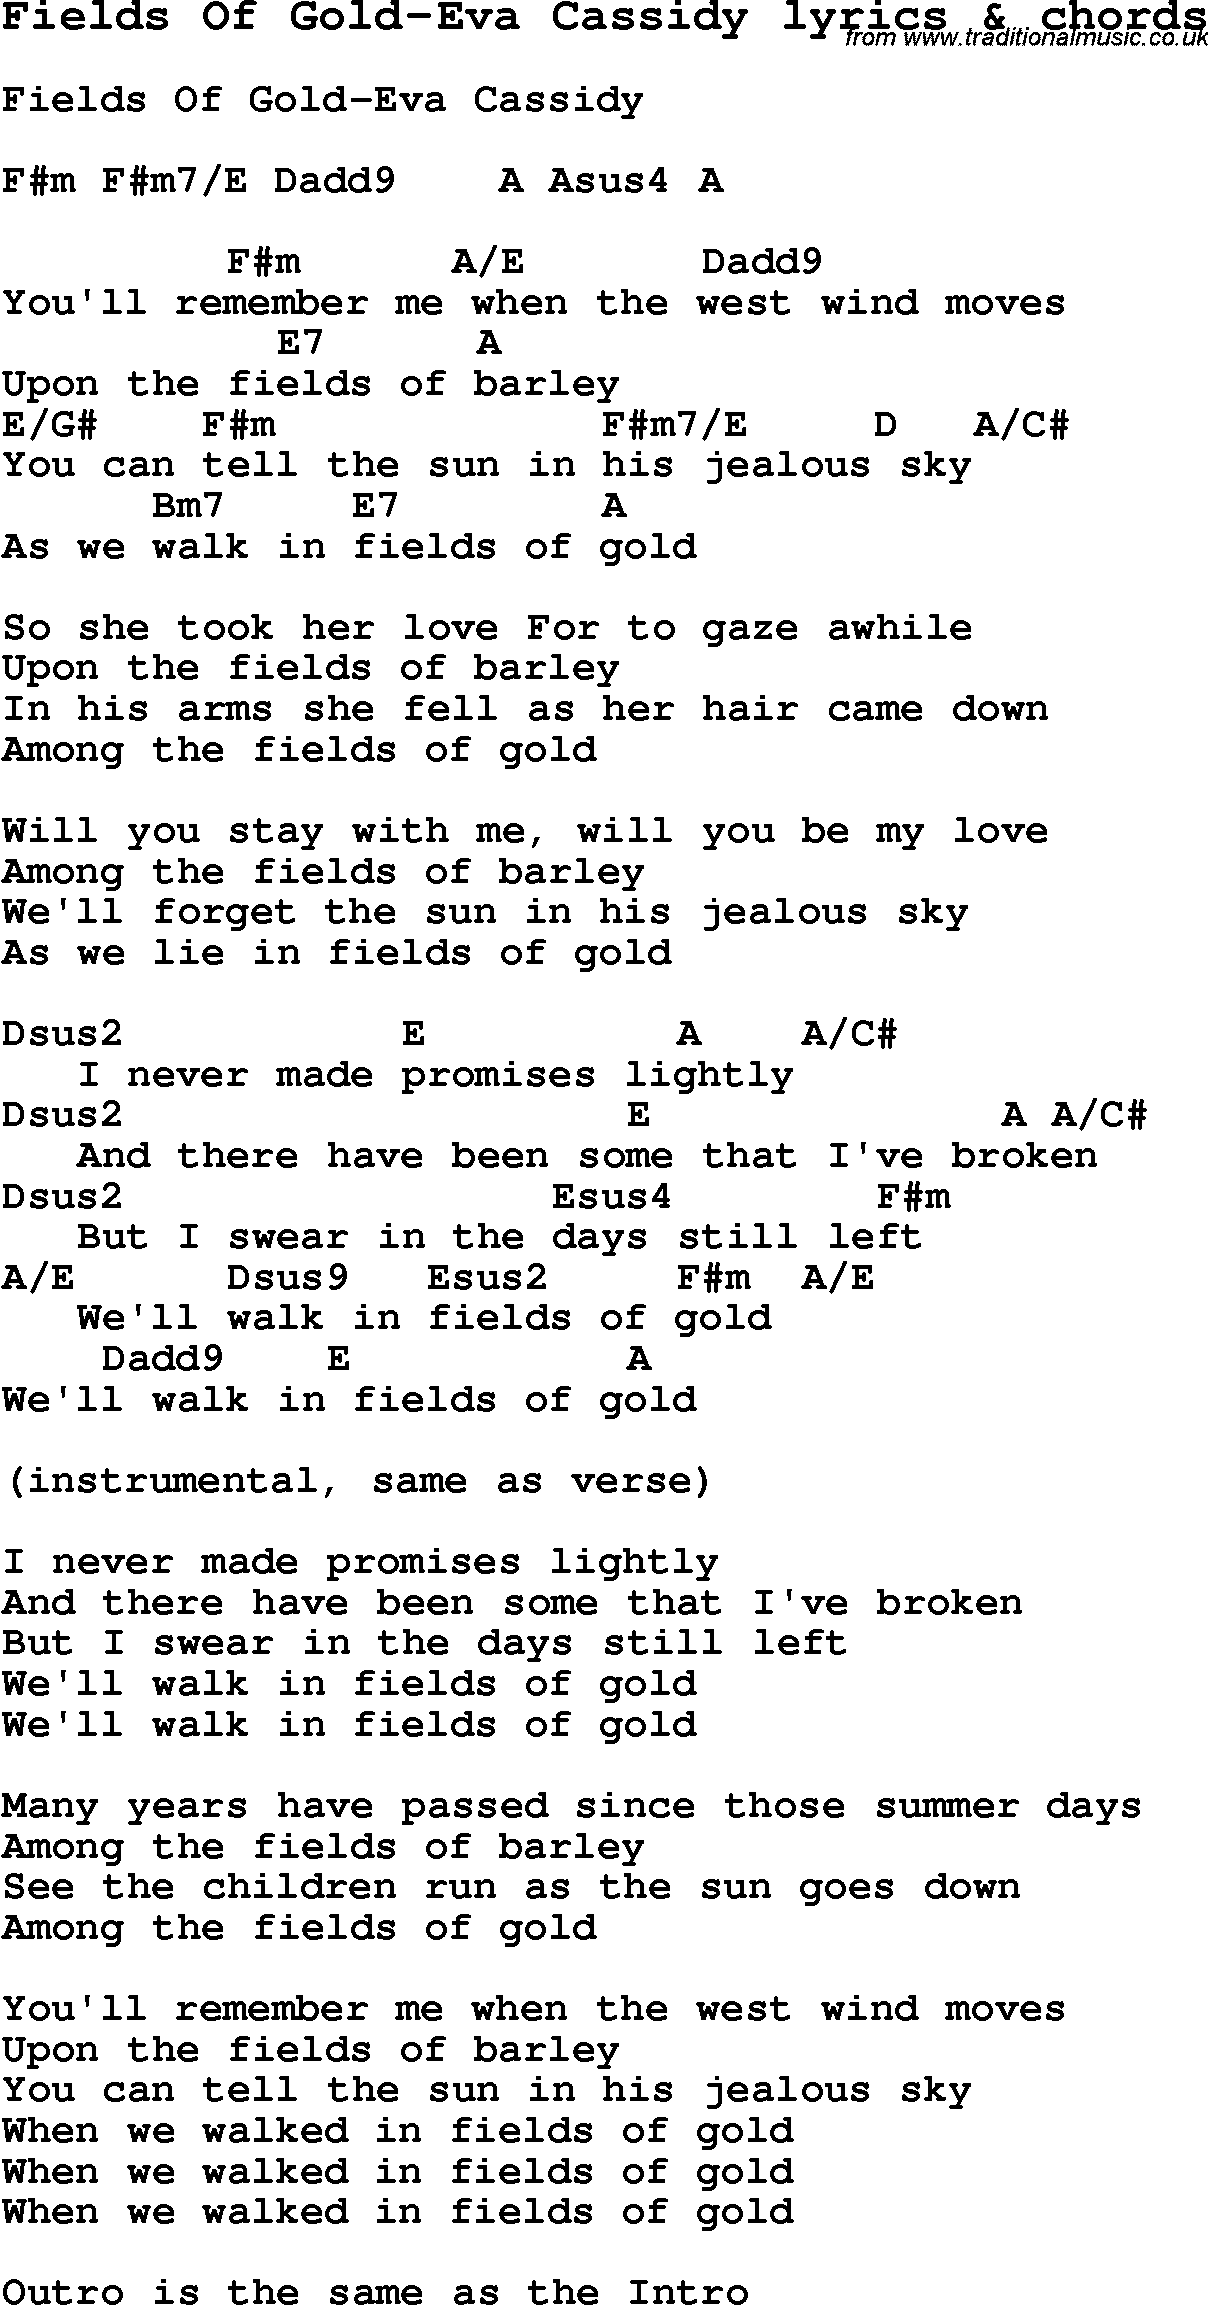 Love Song Lyrics for: Fields Of Gold-Eva Cassidy with chords for Ukulele, Guitar Banjo etc.